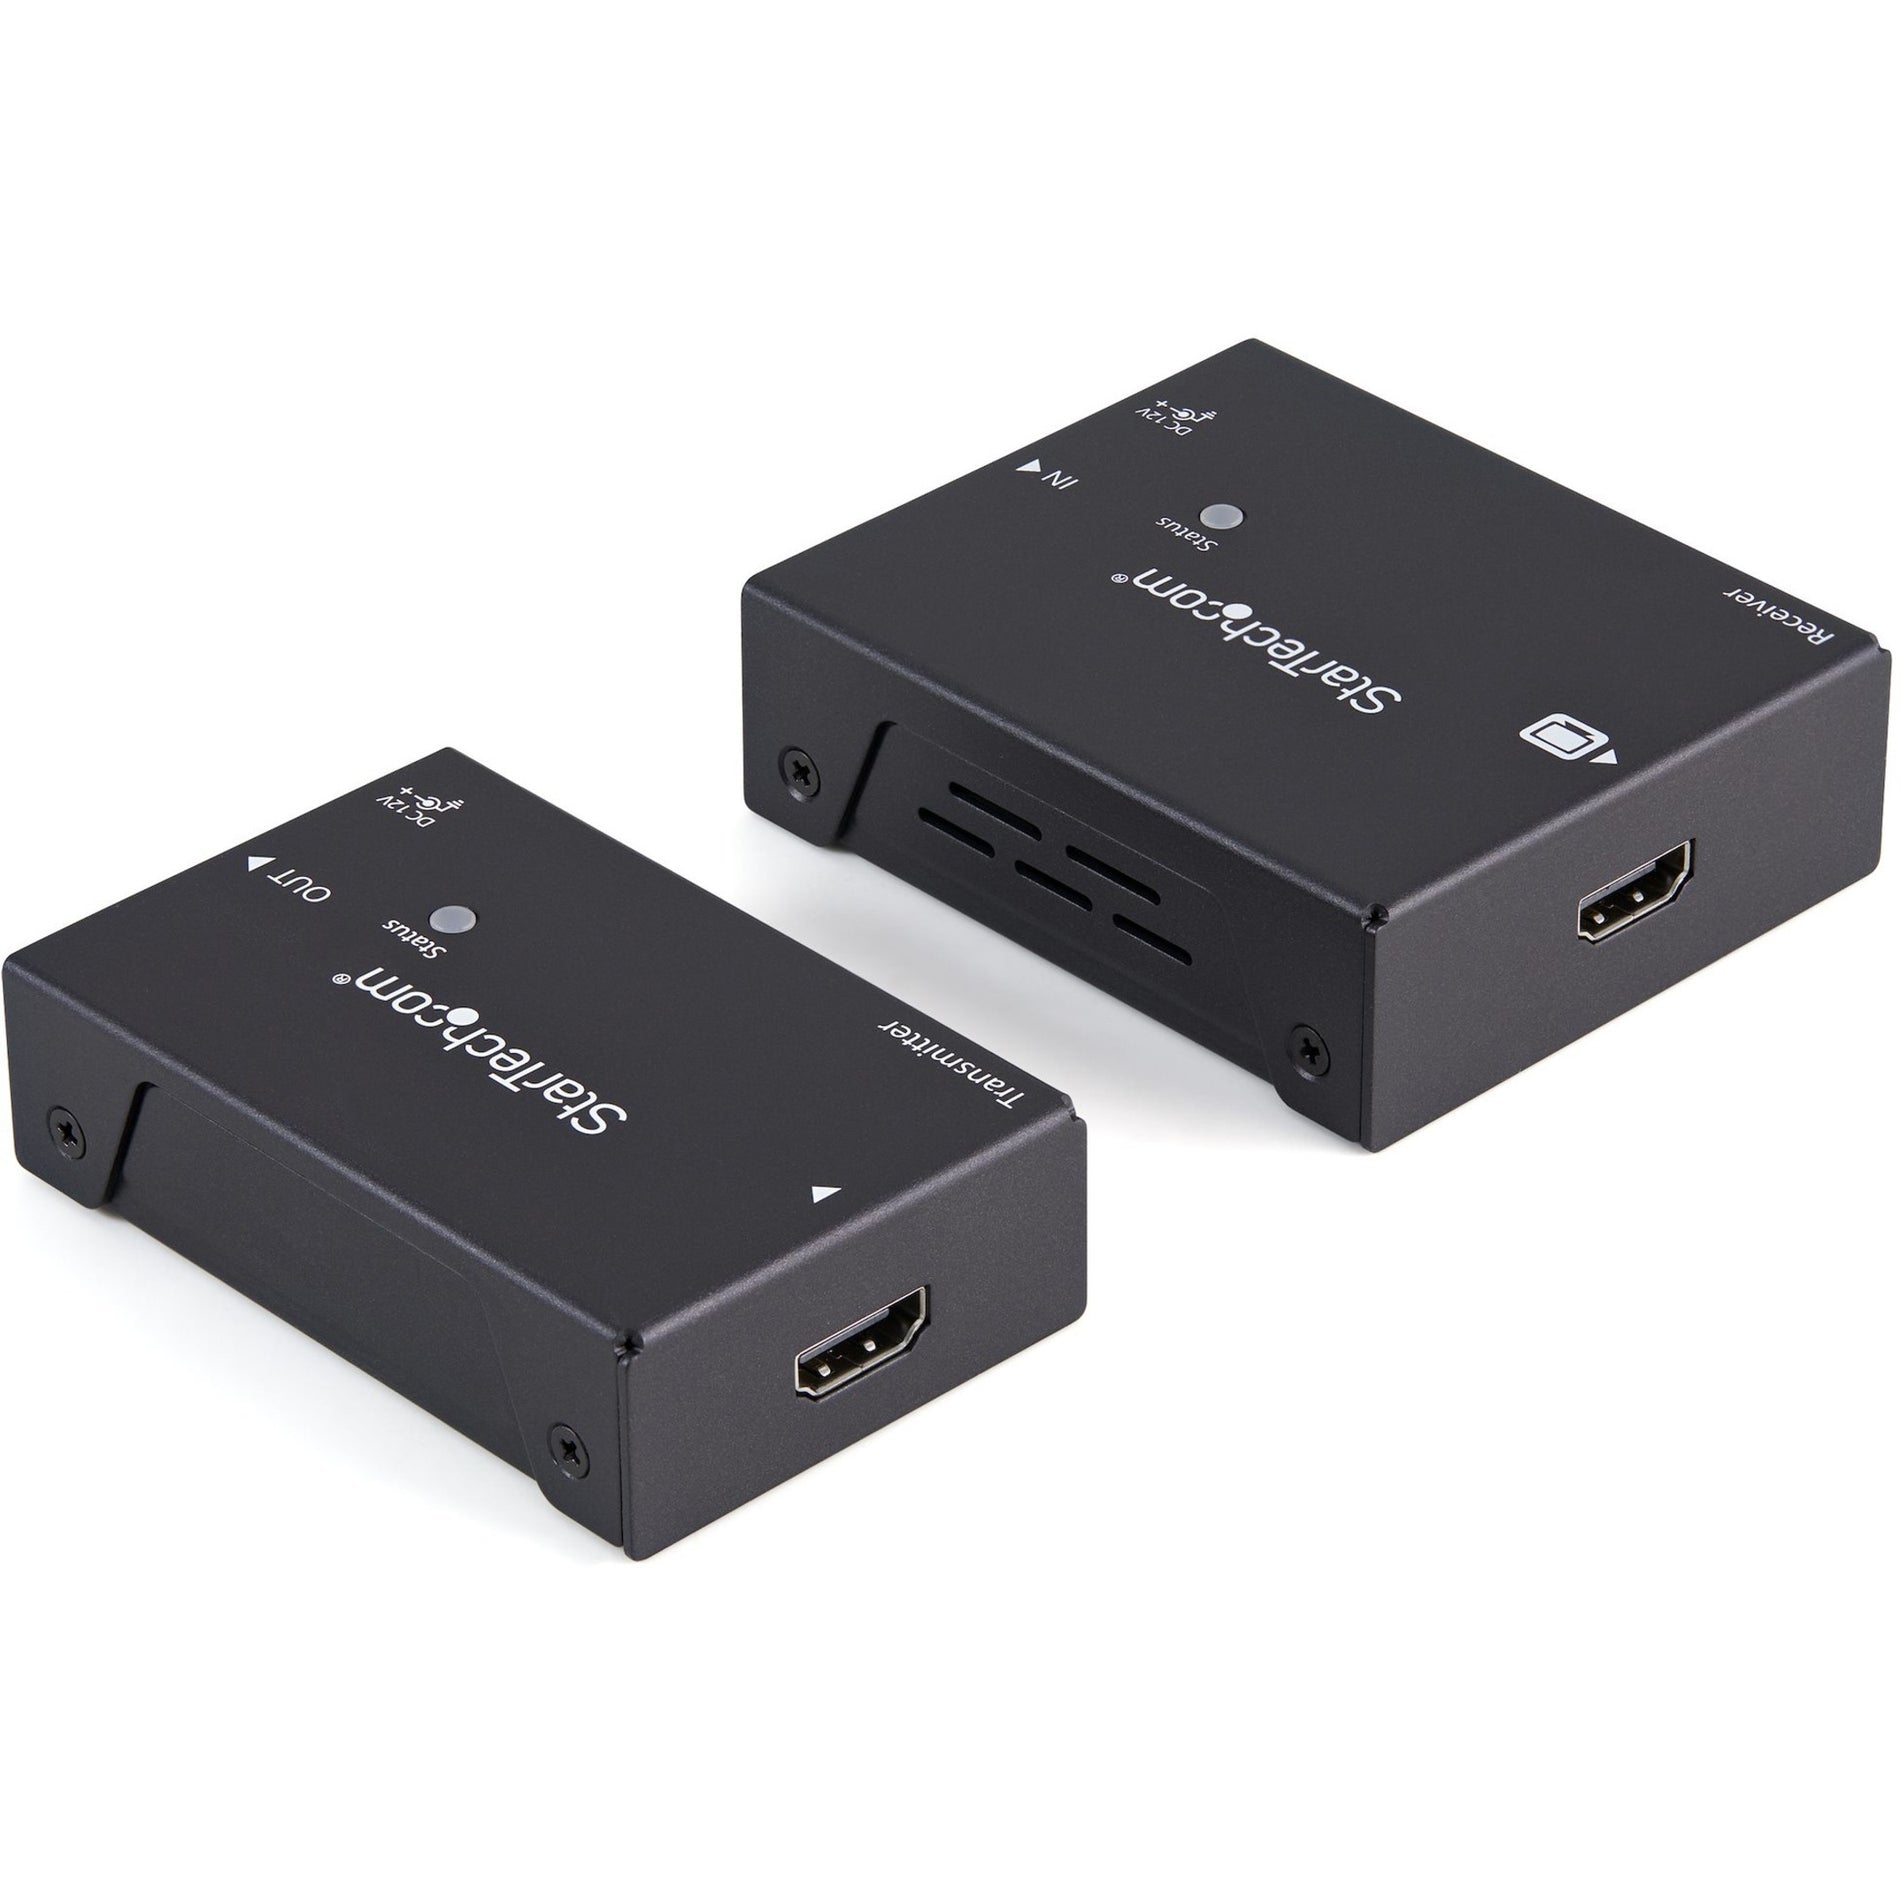 StarTech.com ST121HDBTPW HDMI over CAT5 HDBaseT Extender - Power over Cable - Ultra HD 4K - 330 ft (100m), 2 Year Warranty, TAA Compliant